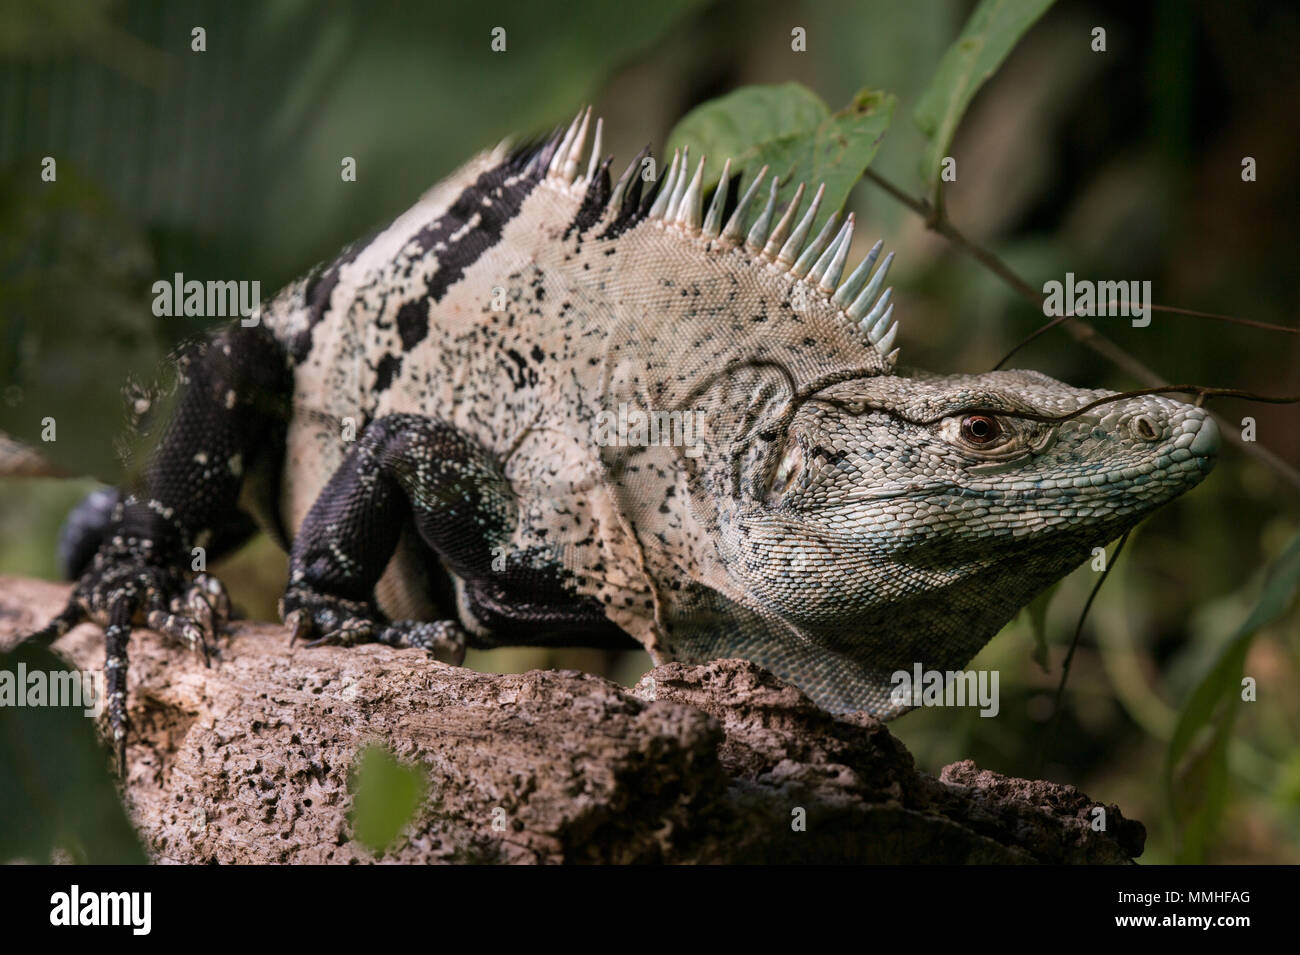 Black Ctenosaurus or Spynitail Iguana, Ctenosaura similis, Iguanidae, Carara National Park, Costa Rica, Centroamerica Stock Photo